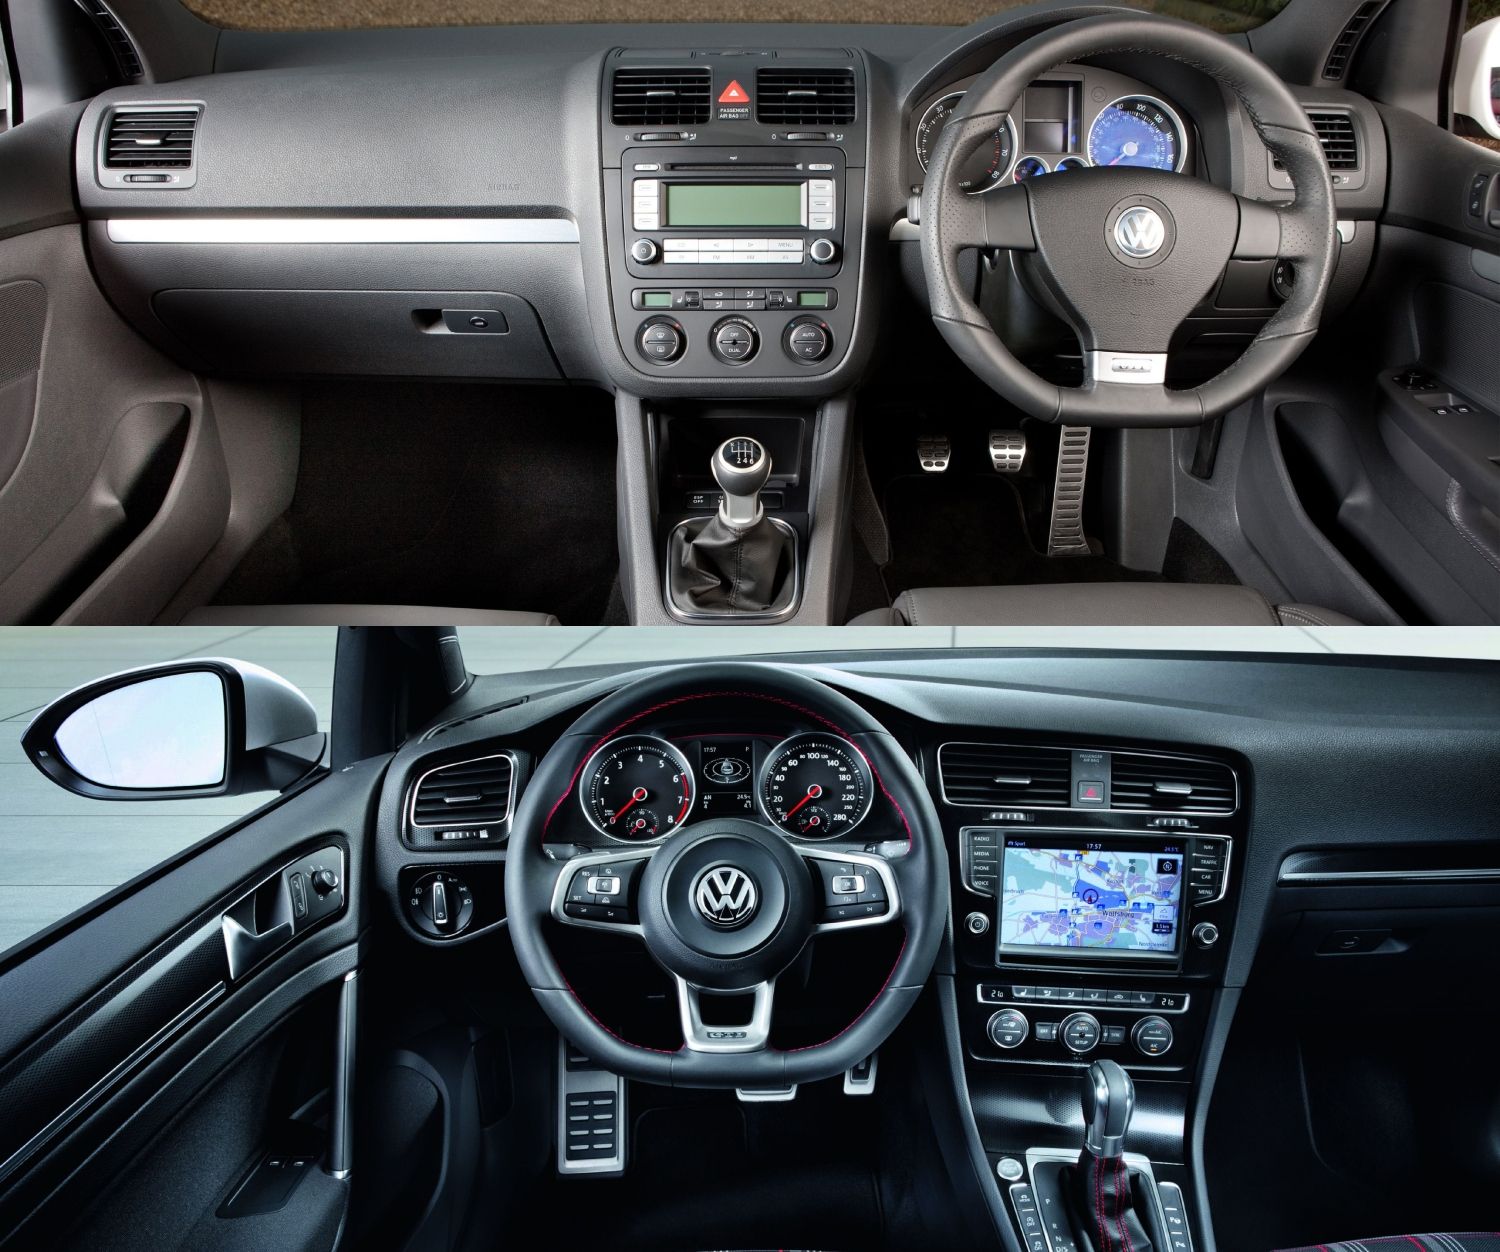 MK 5 and MK 6 Golf interior